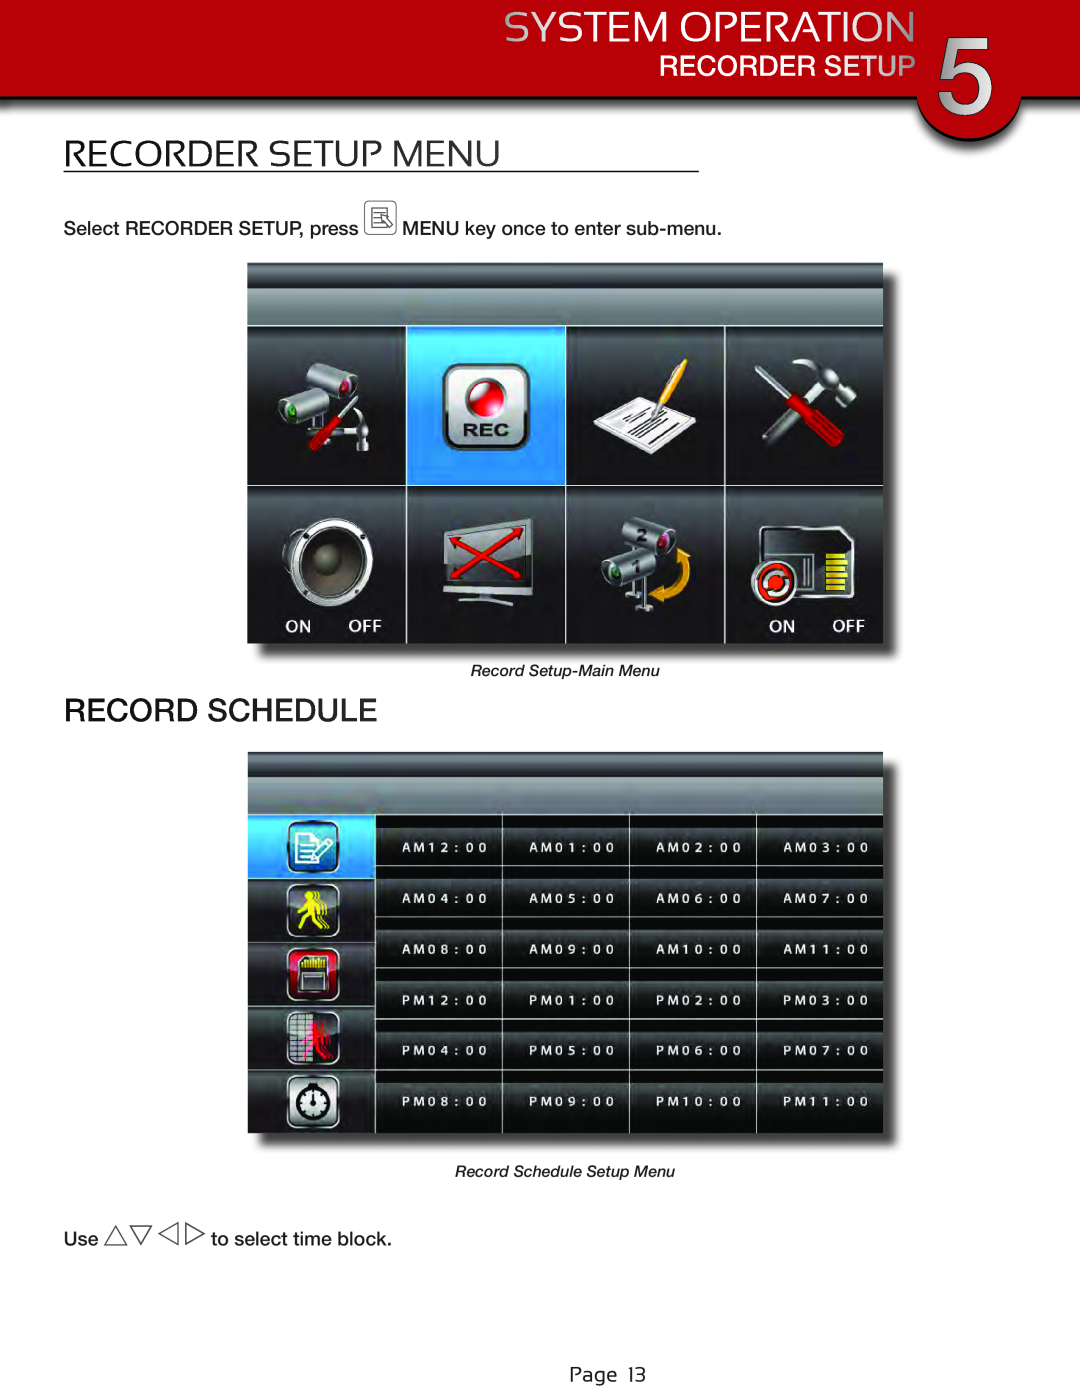 First Alert DWS-471, DWS-472 user manual Recorder Setup Menu, Record Schedule, System Operation, Record Setup-MainMenu 